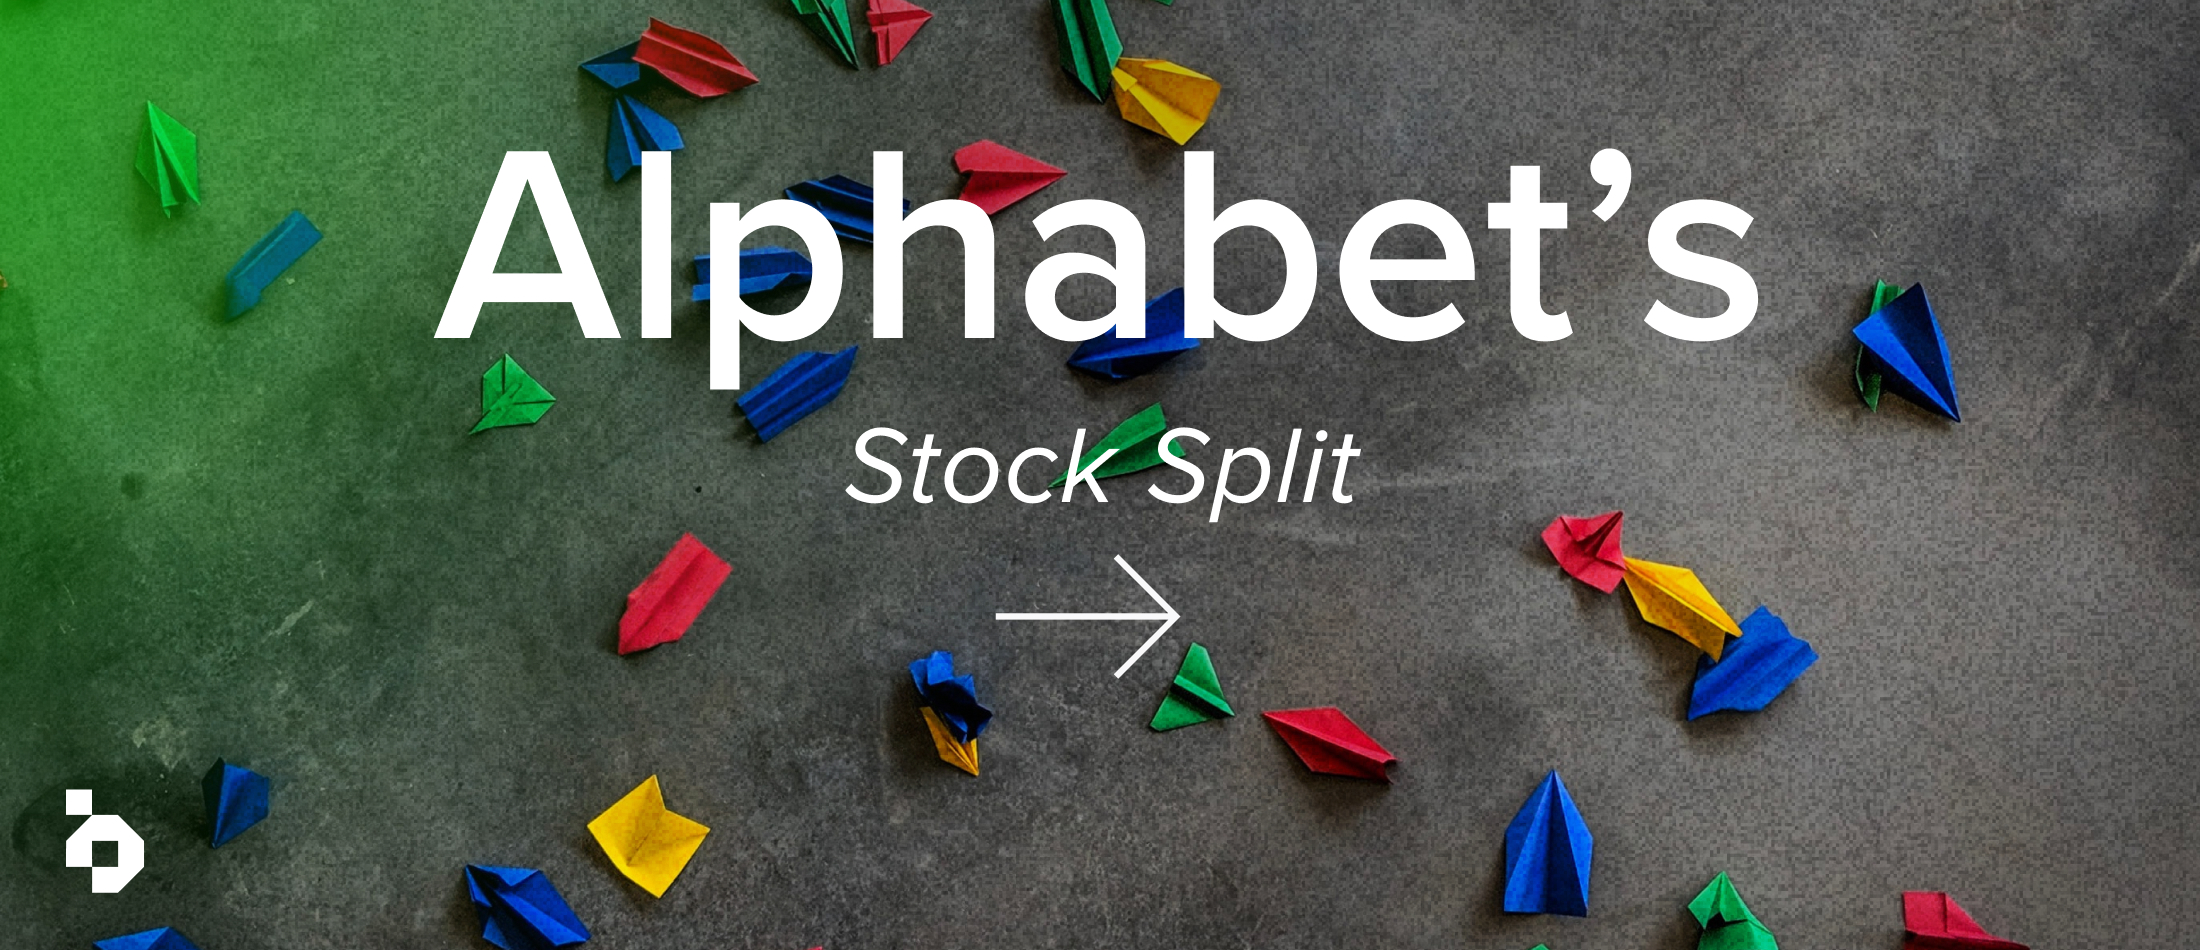 Alphabet’s Stock Split